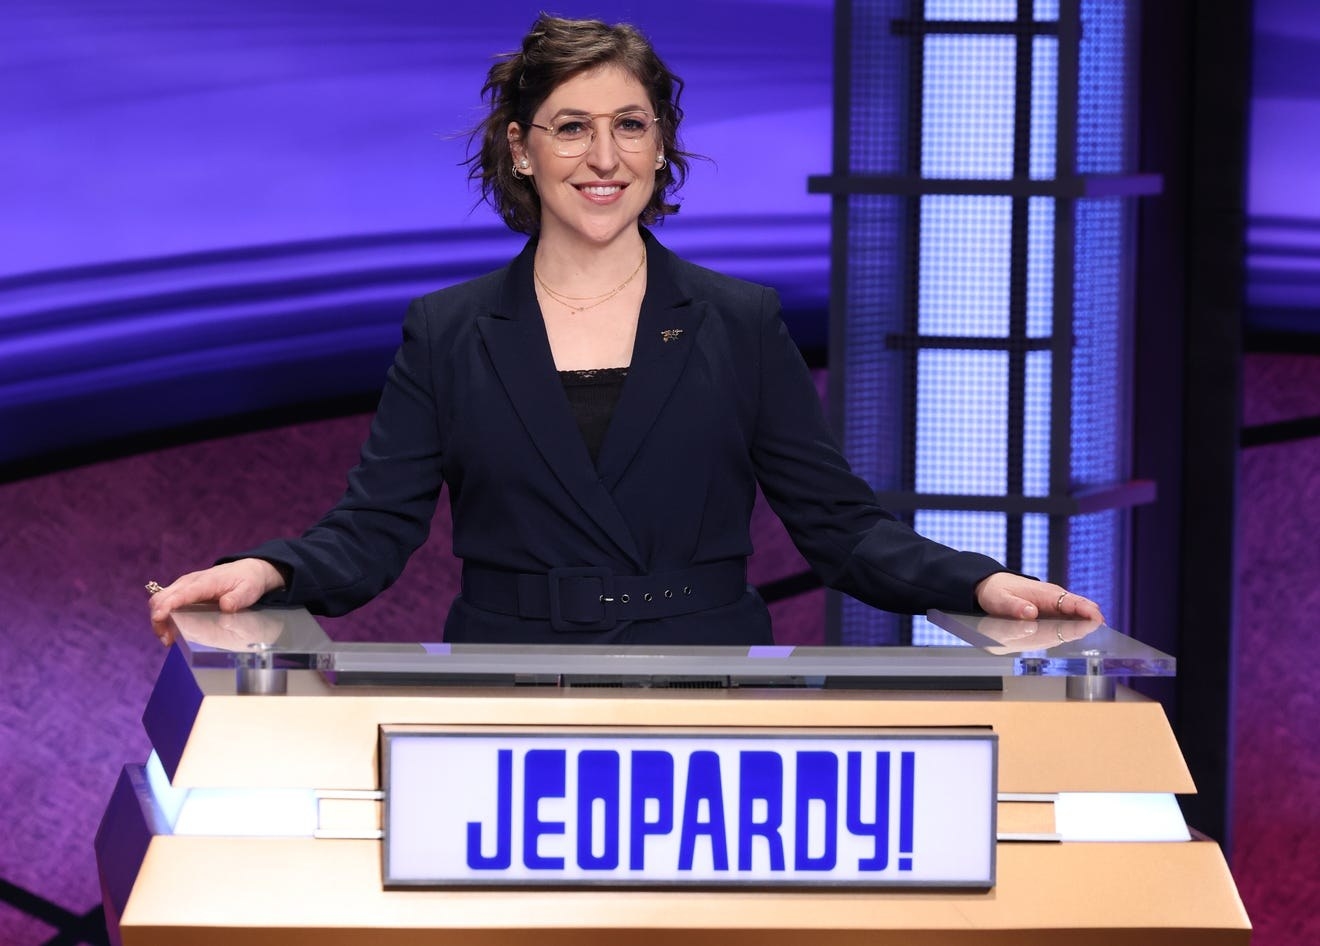 Mayim Bialik at the Jeopardy! podium